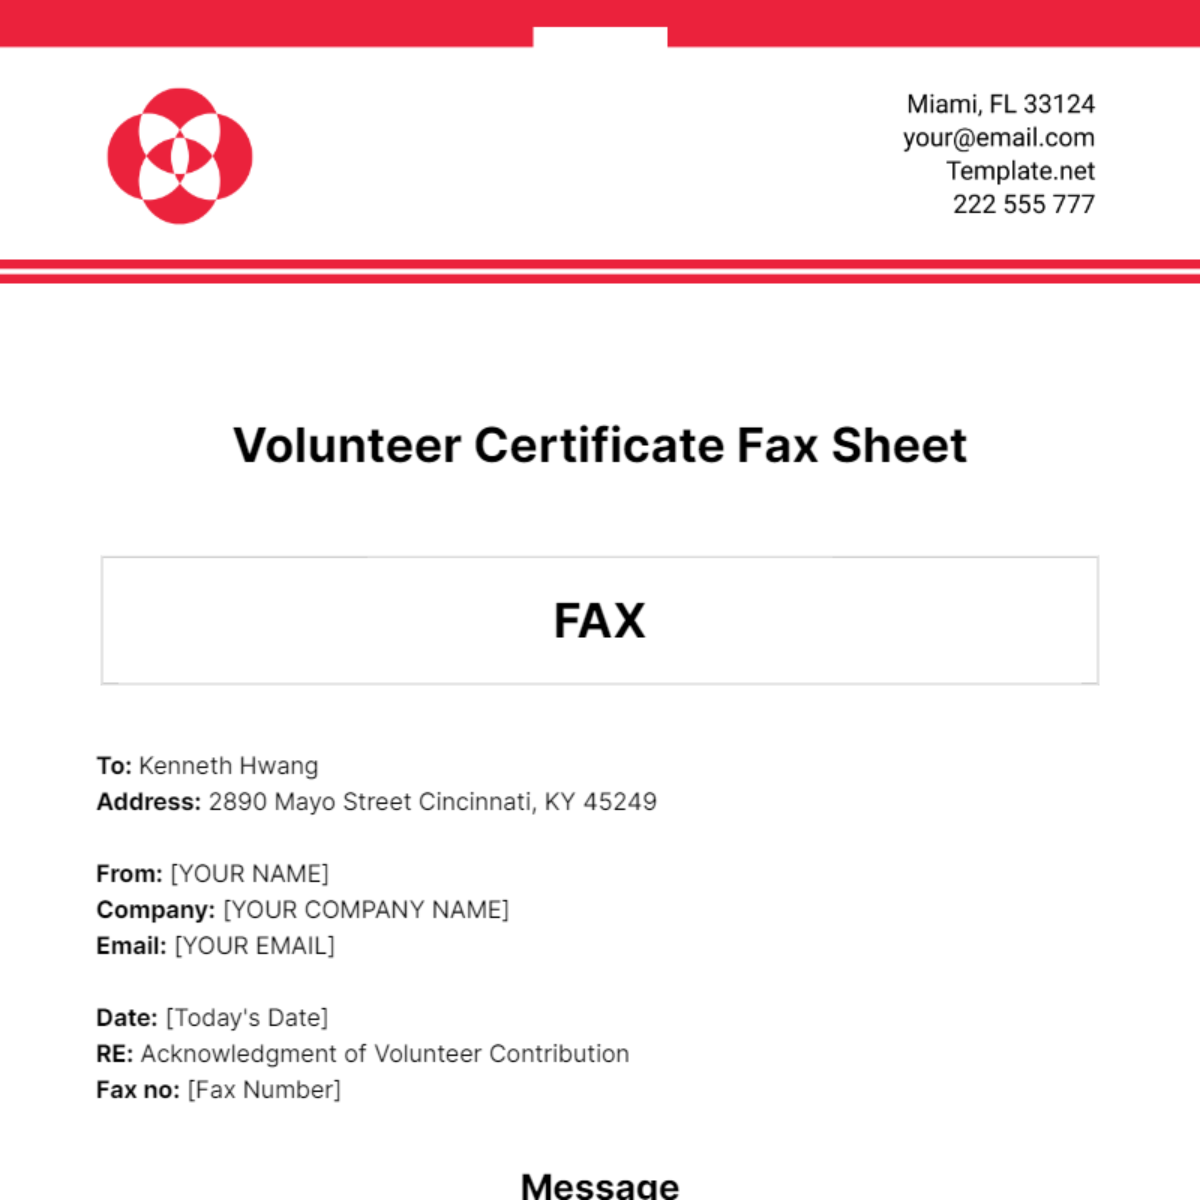 Free Volunteer Certificate Fax Sheet Template